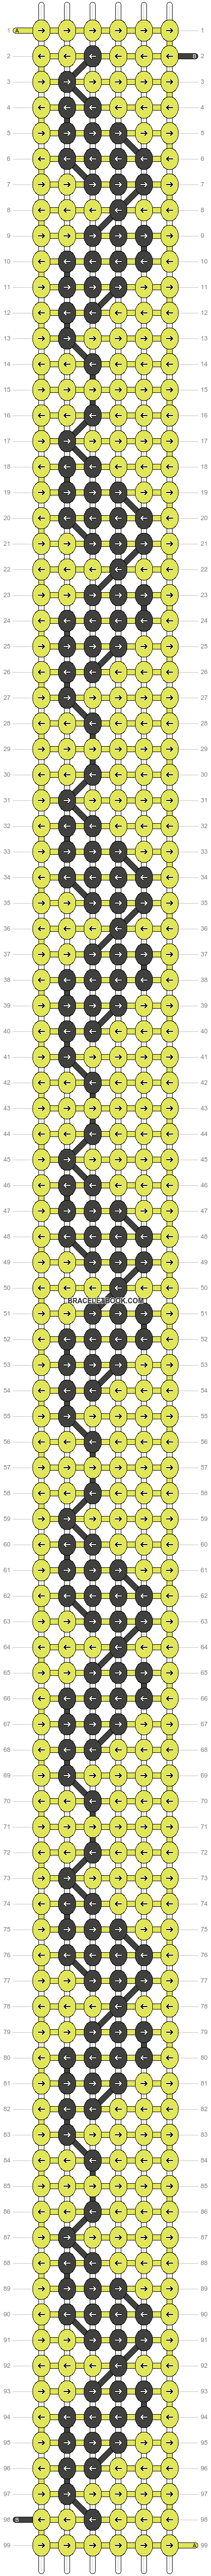 Alpha pattern #21924 variation #41638 pattern